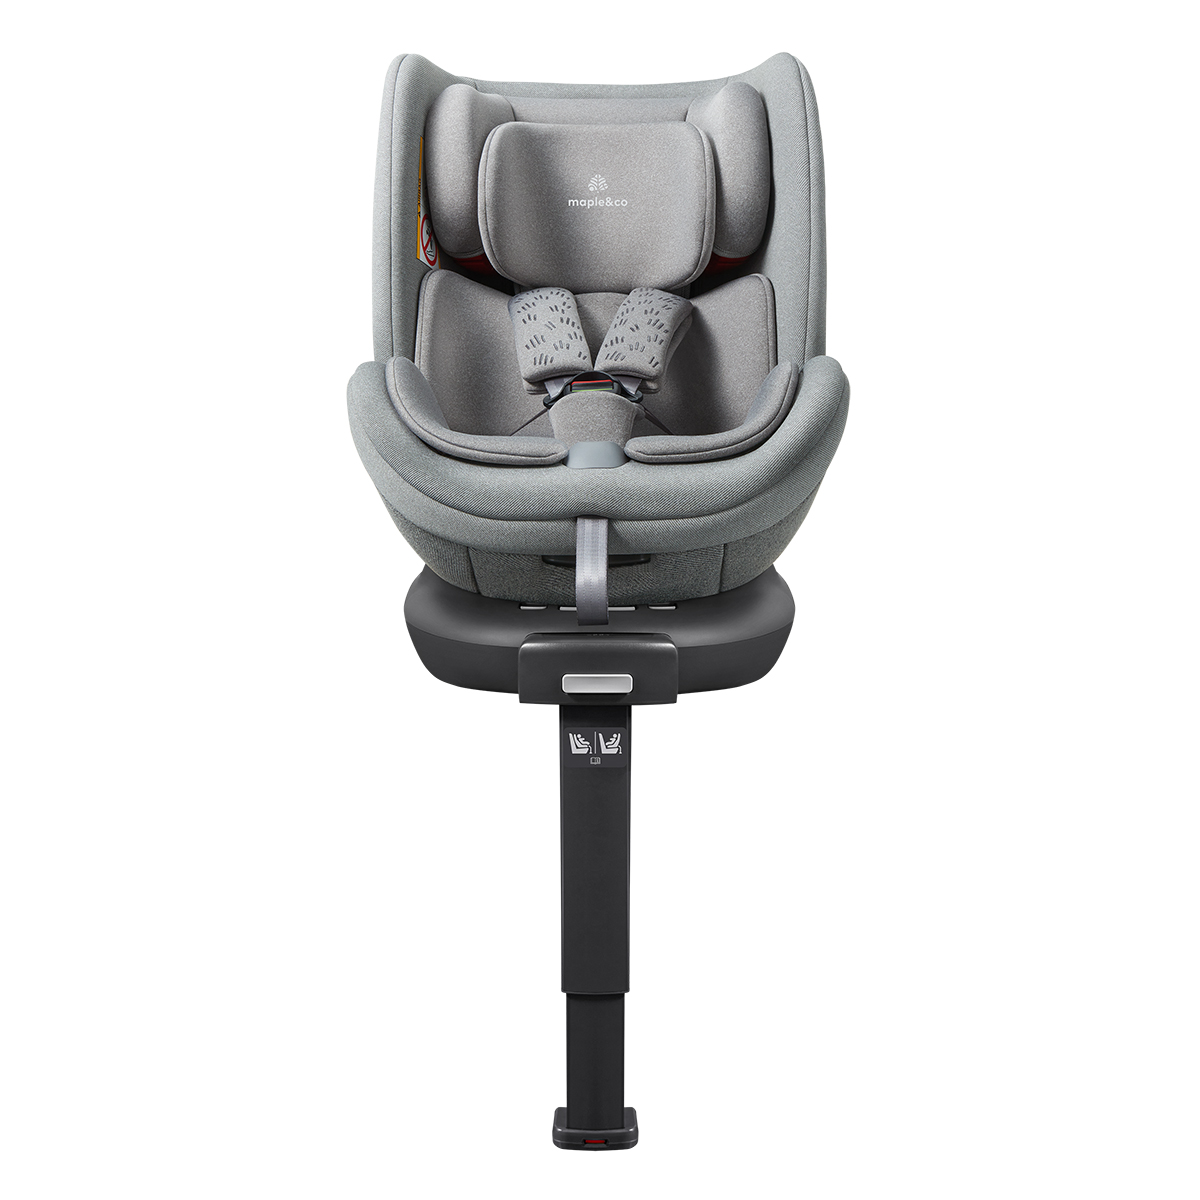 YKO - Maple&Co Child Car Seat - Grey